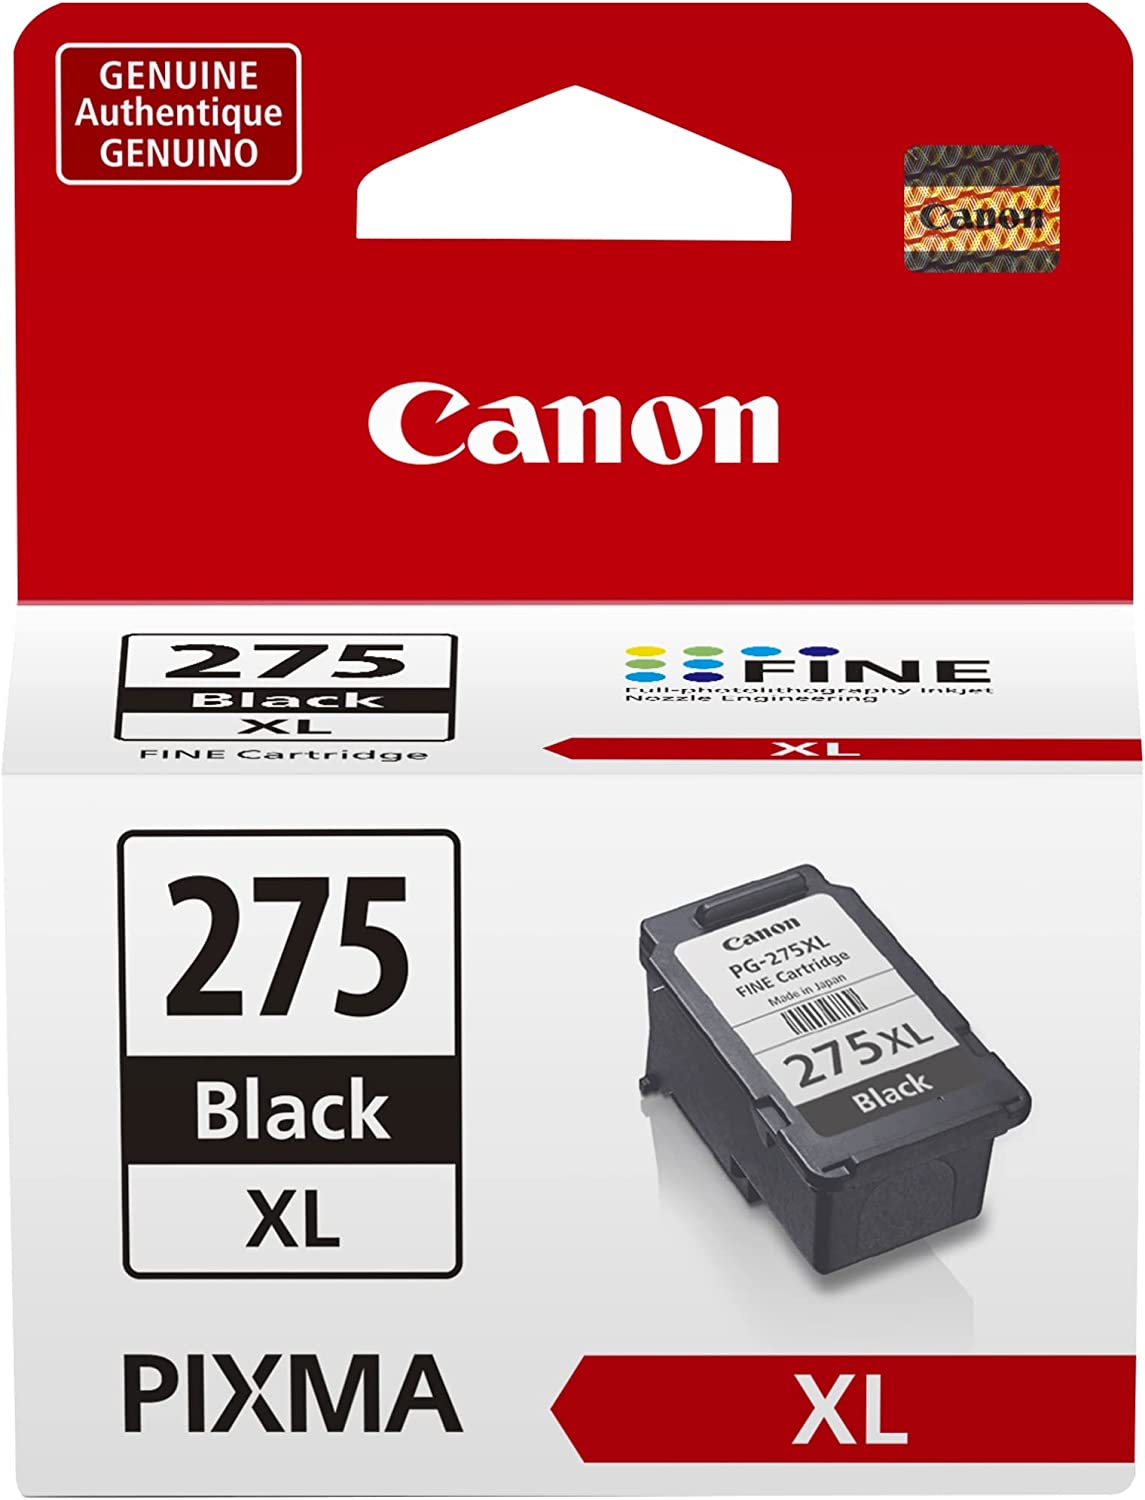 Canon PG-275XL 블랙 잉크 카트리지, PIXMATS3520, TS3522 및 TR4720 프린터와 호환